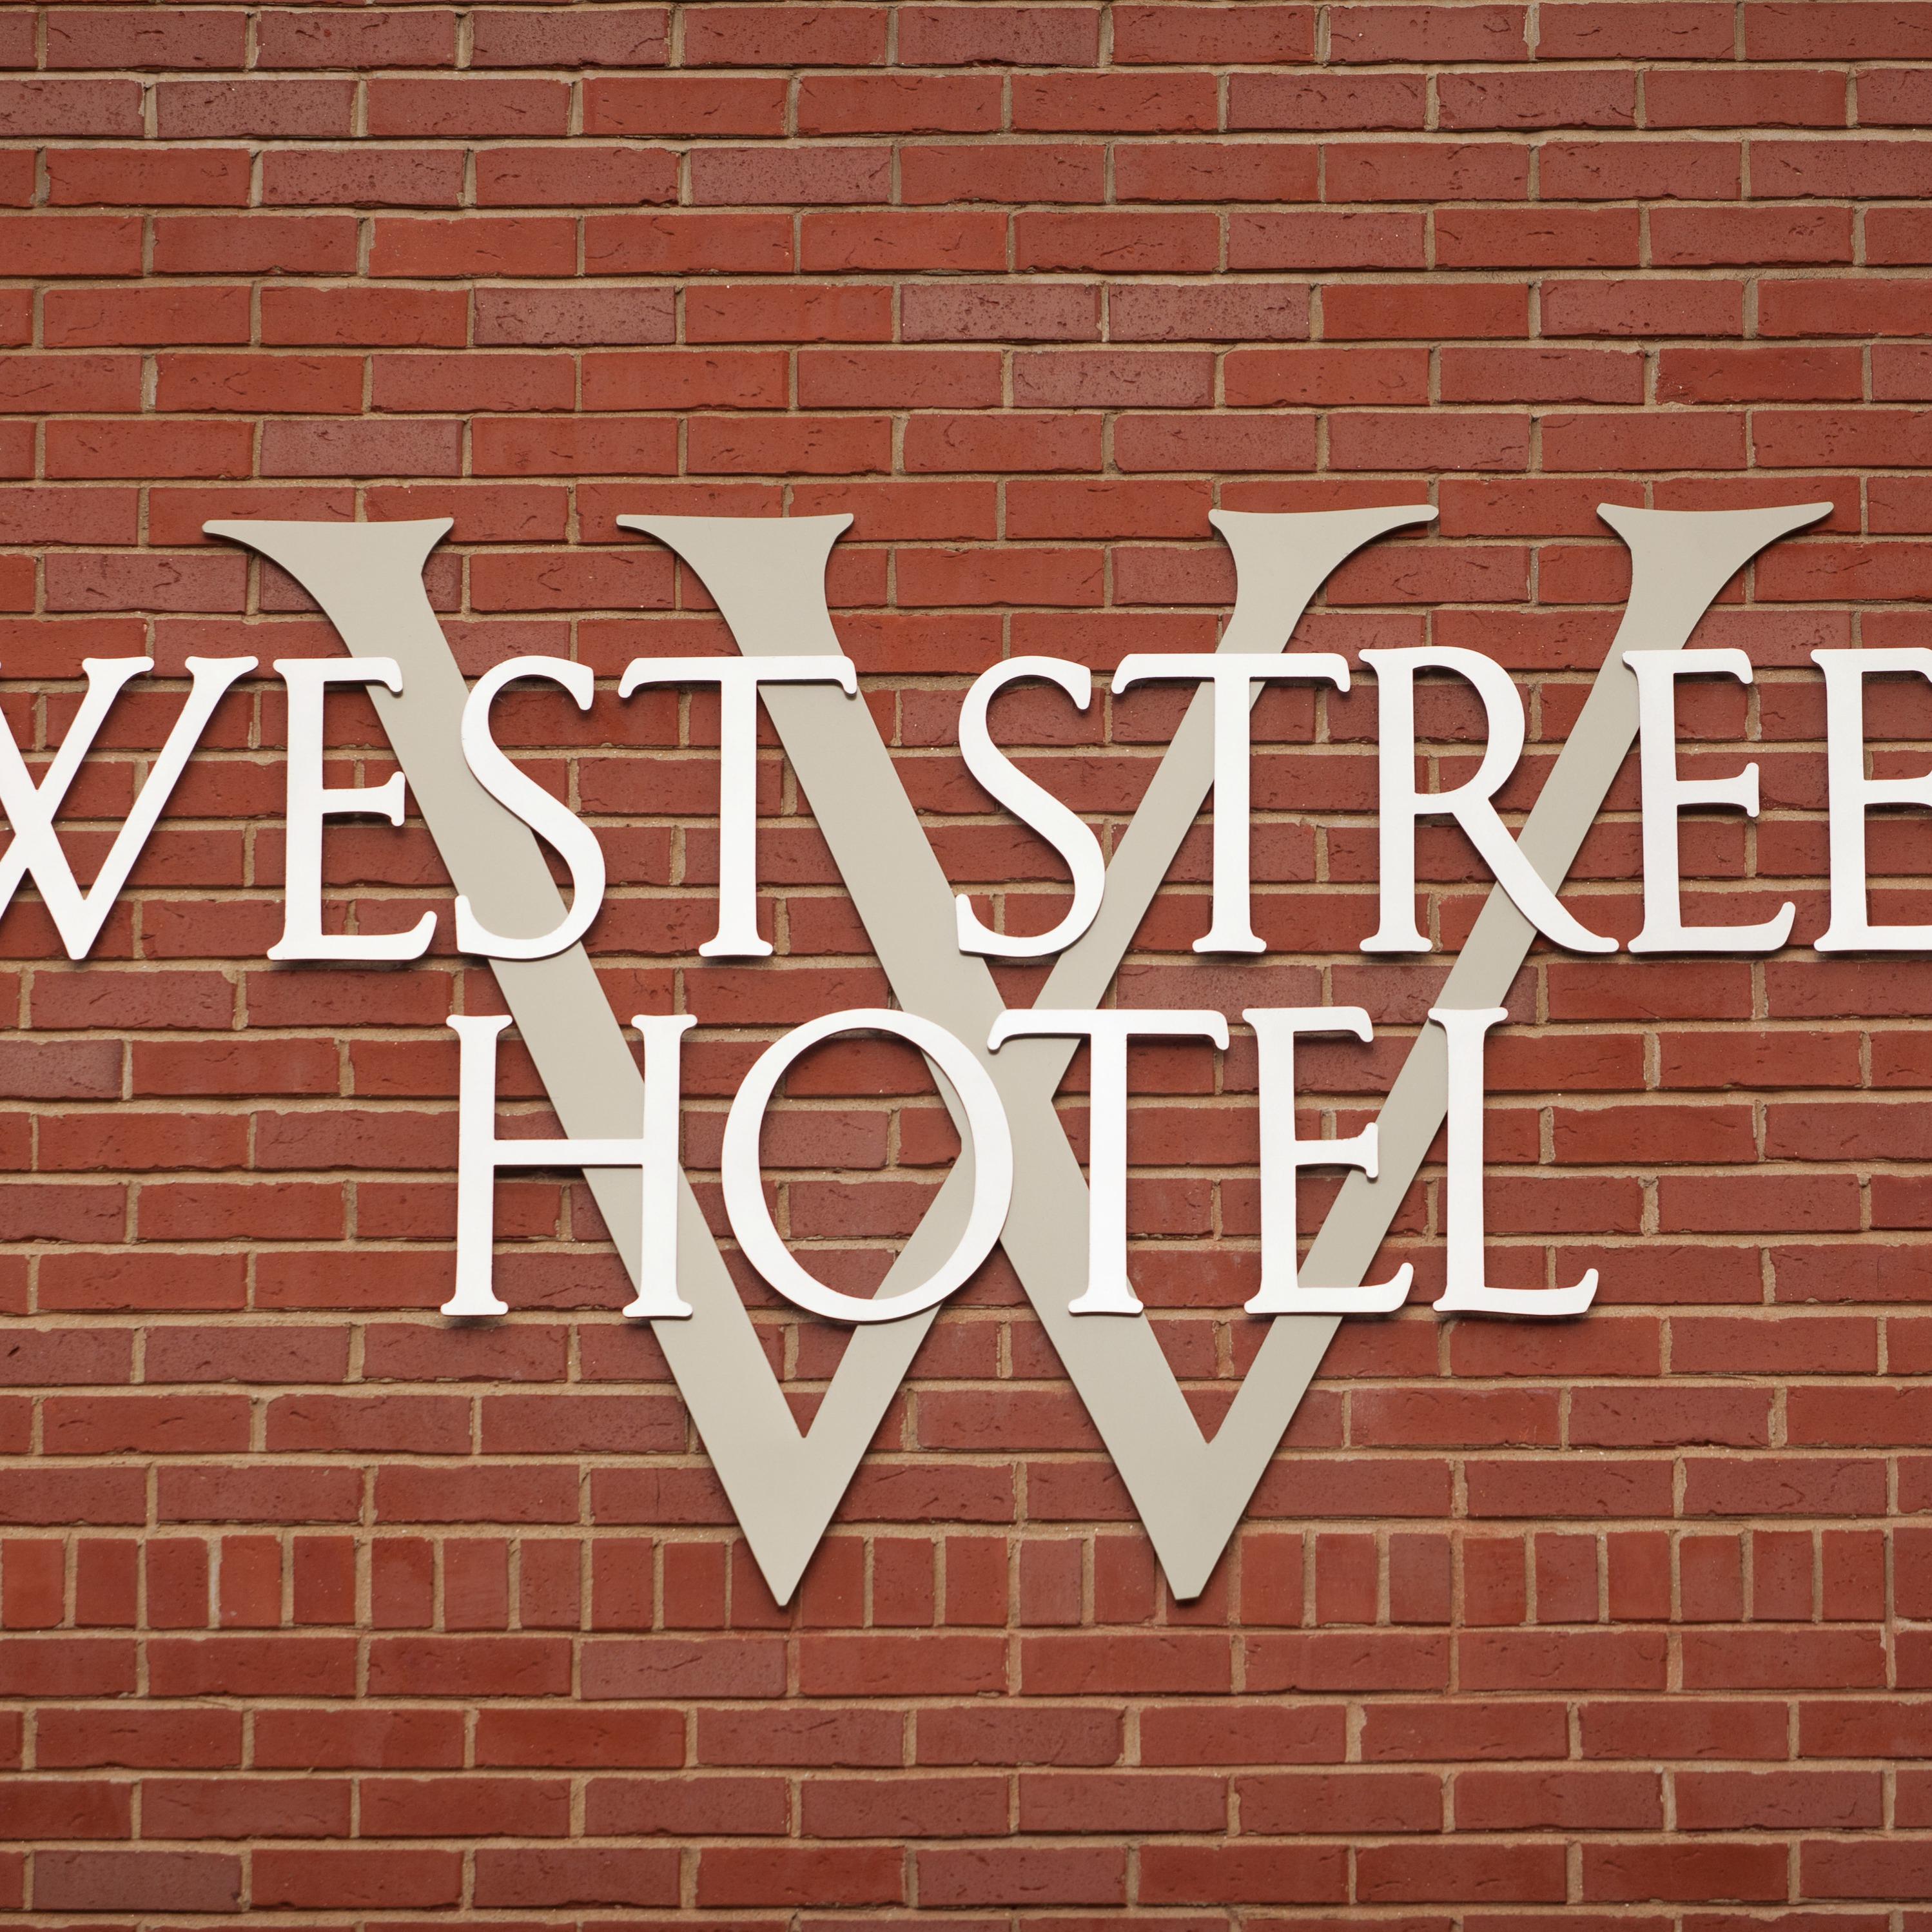 West Street Hotel